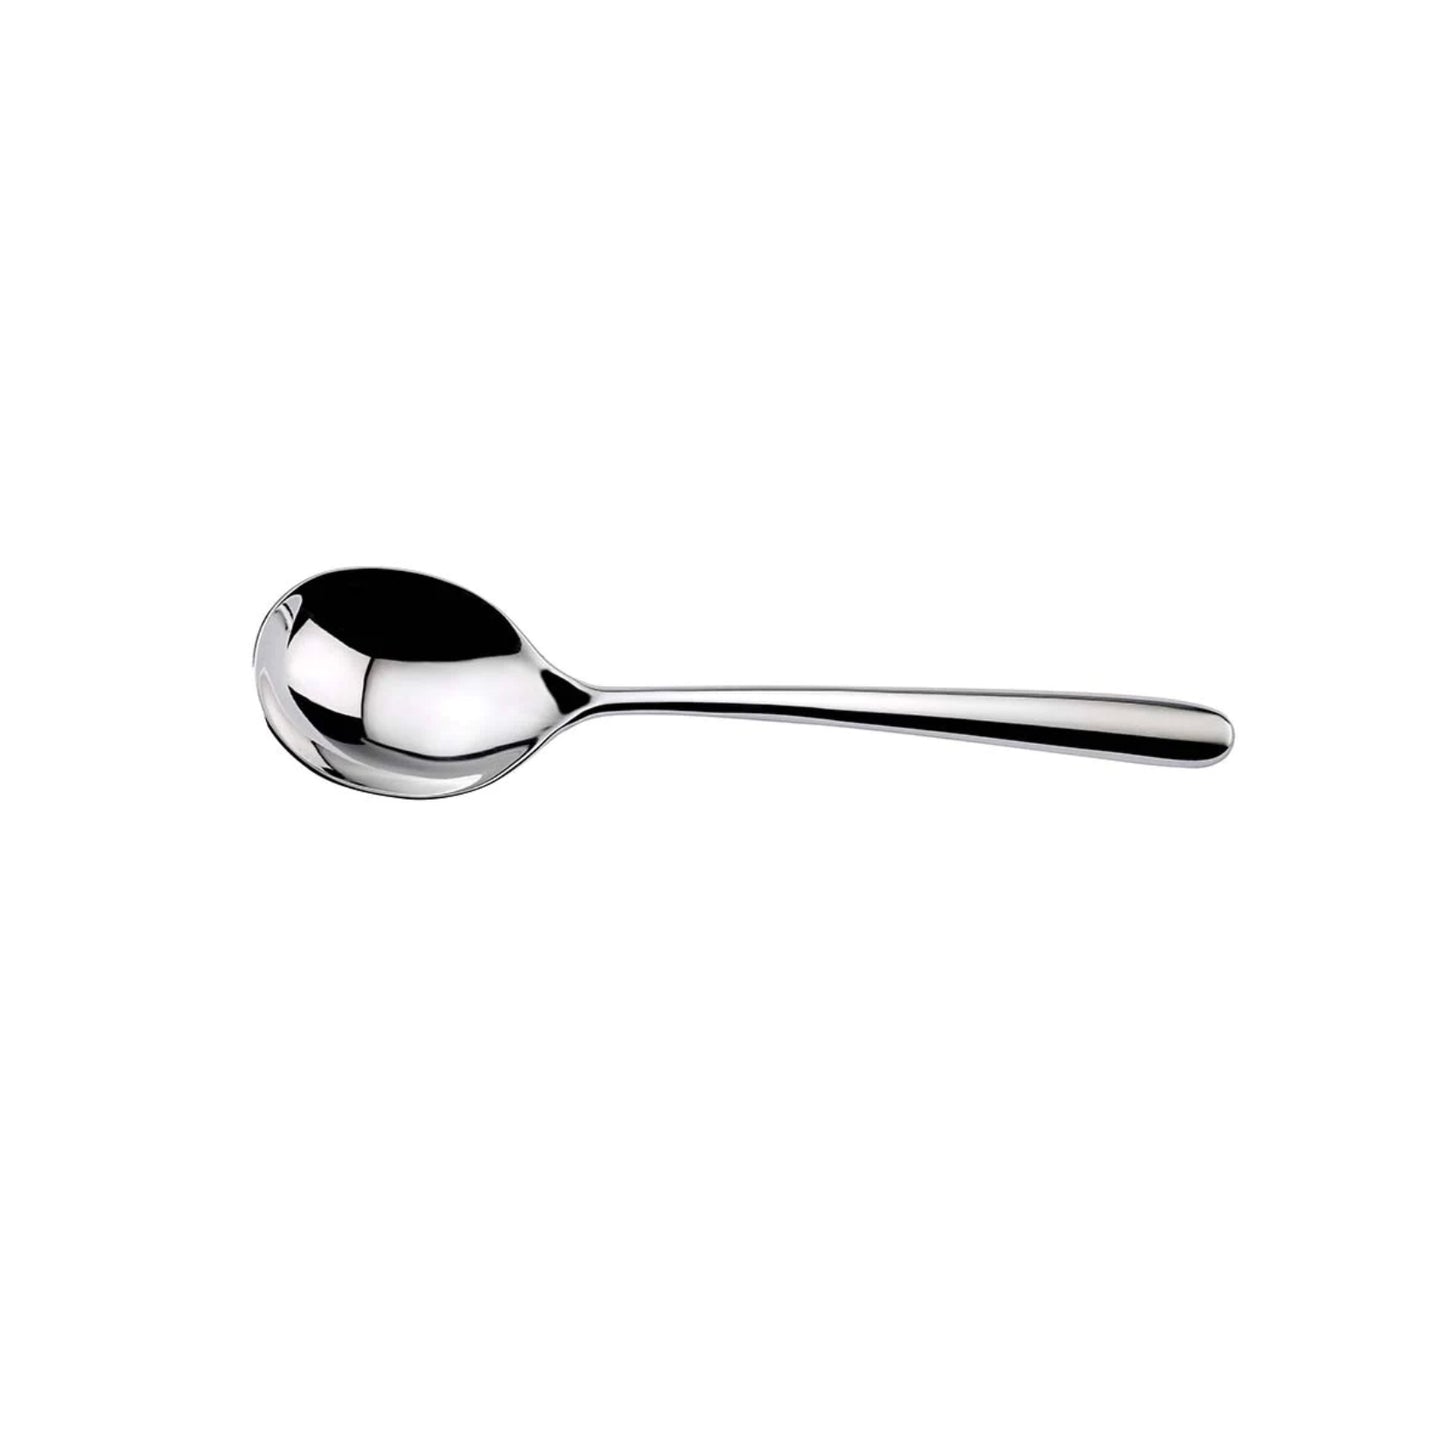 Arthur Price Signature Echo Soup Spoon